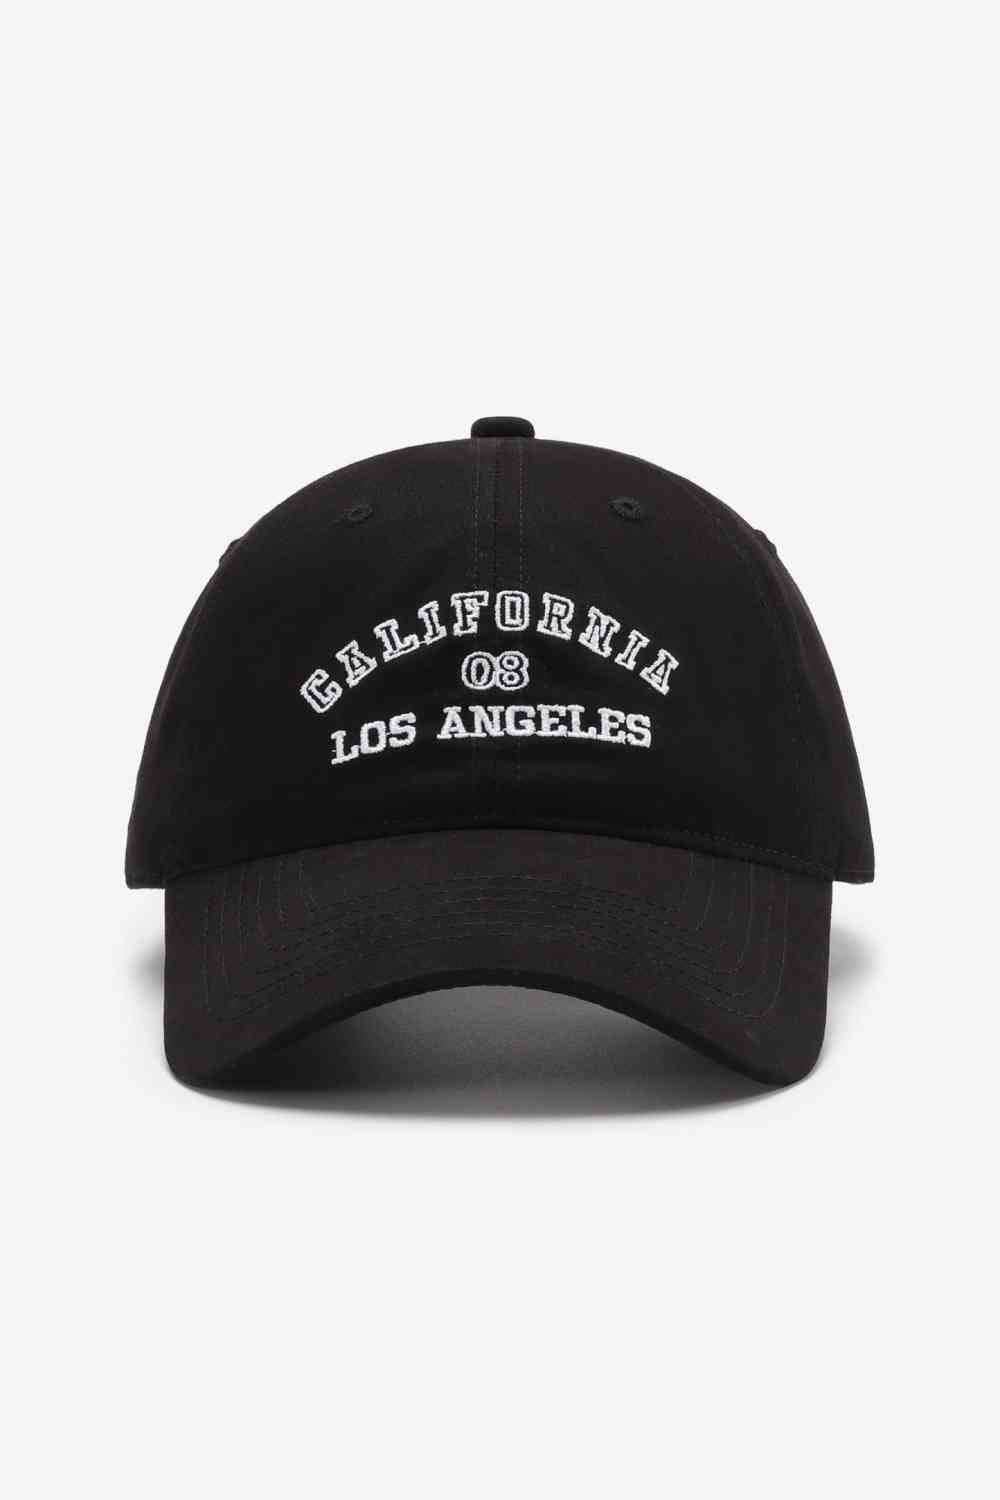 CALIFORNIA LOS ANGELES Adjustable Baseball Cap